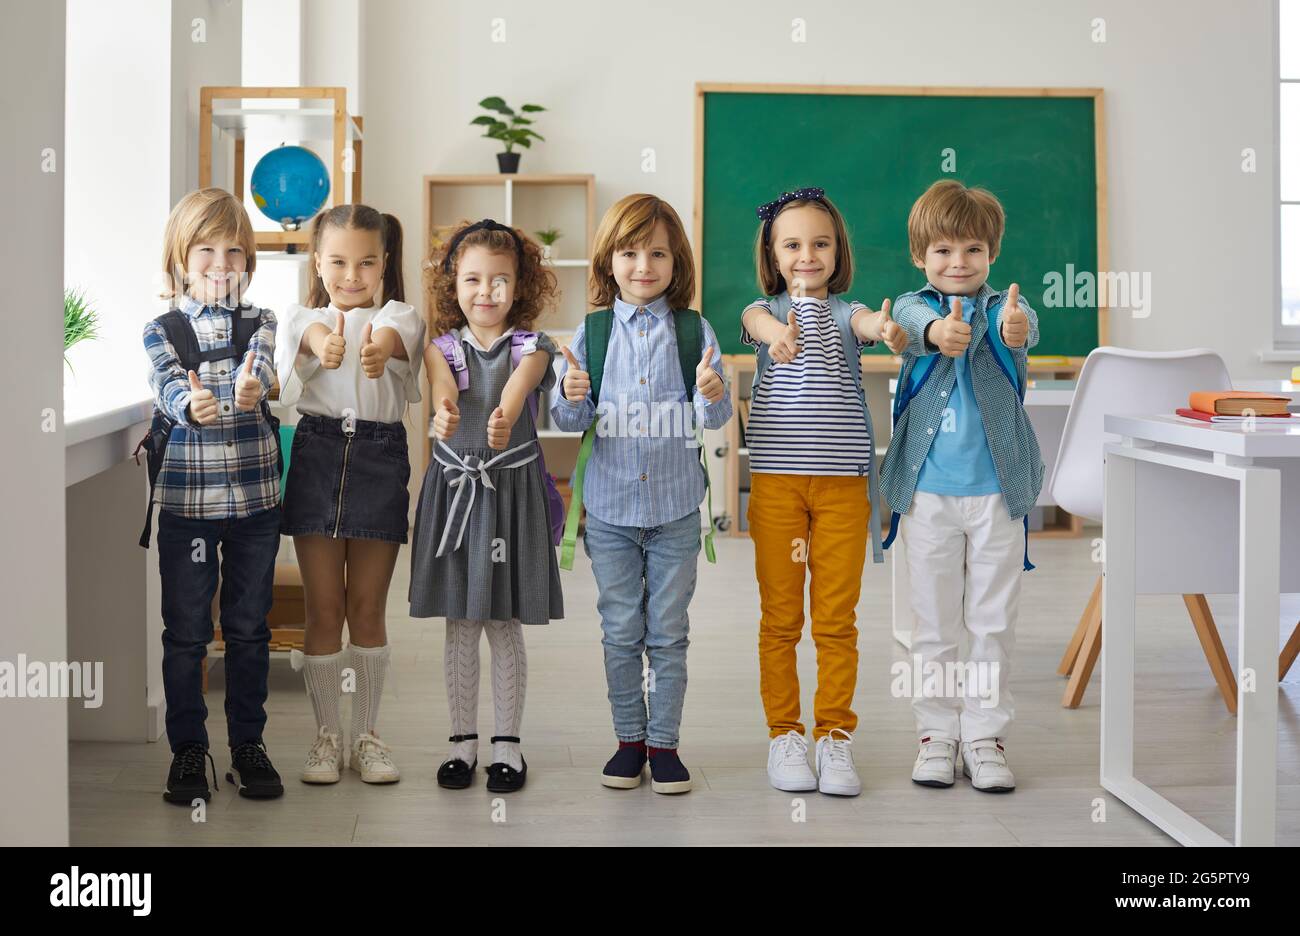 Happy smiling little children showing thumbs up standing in school classroom Stock Photo